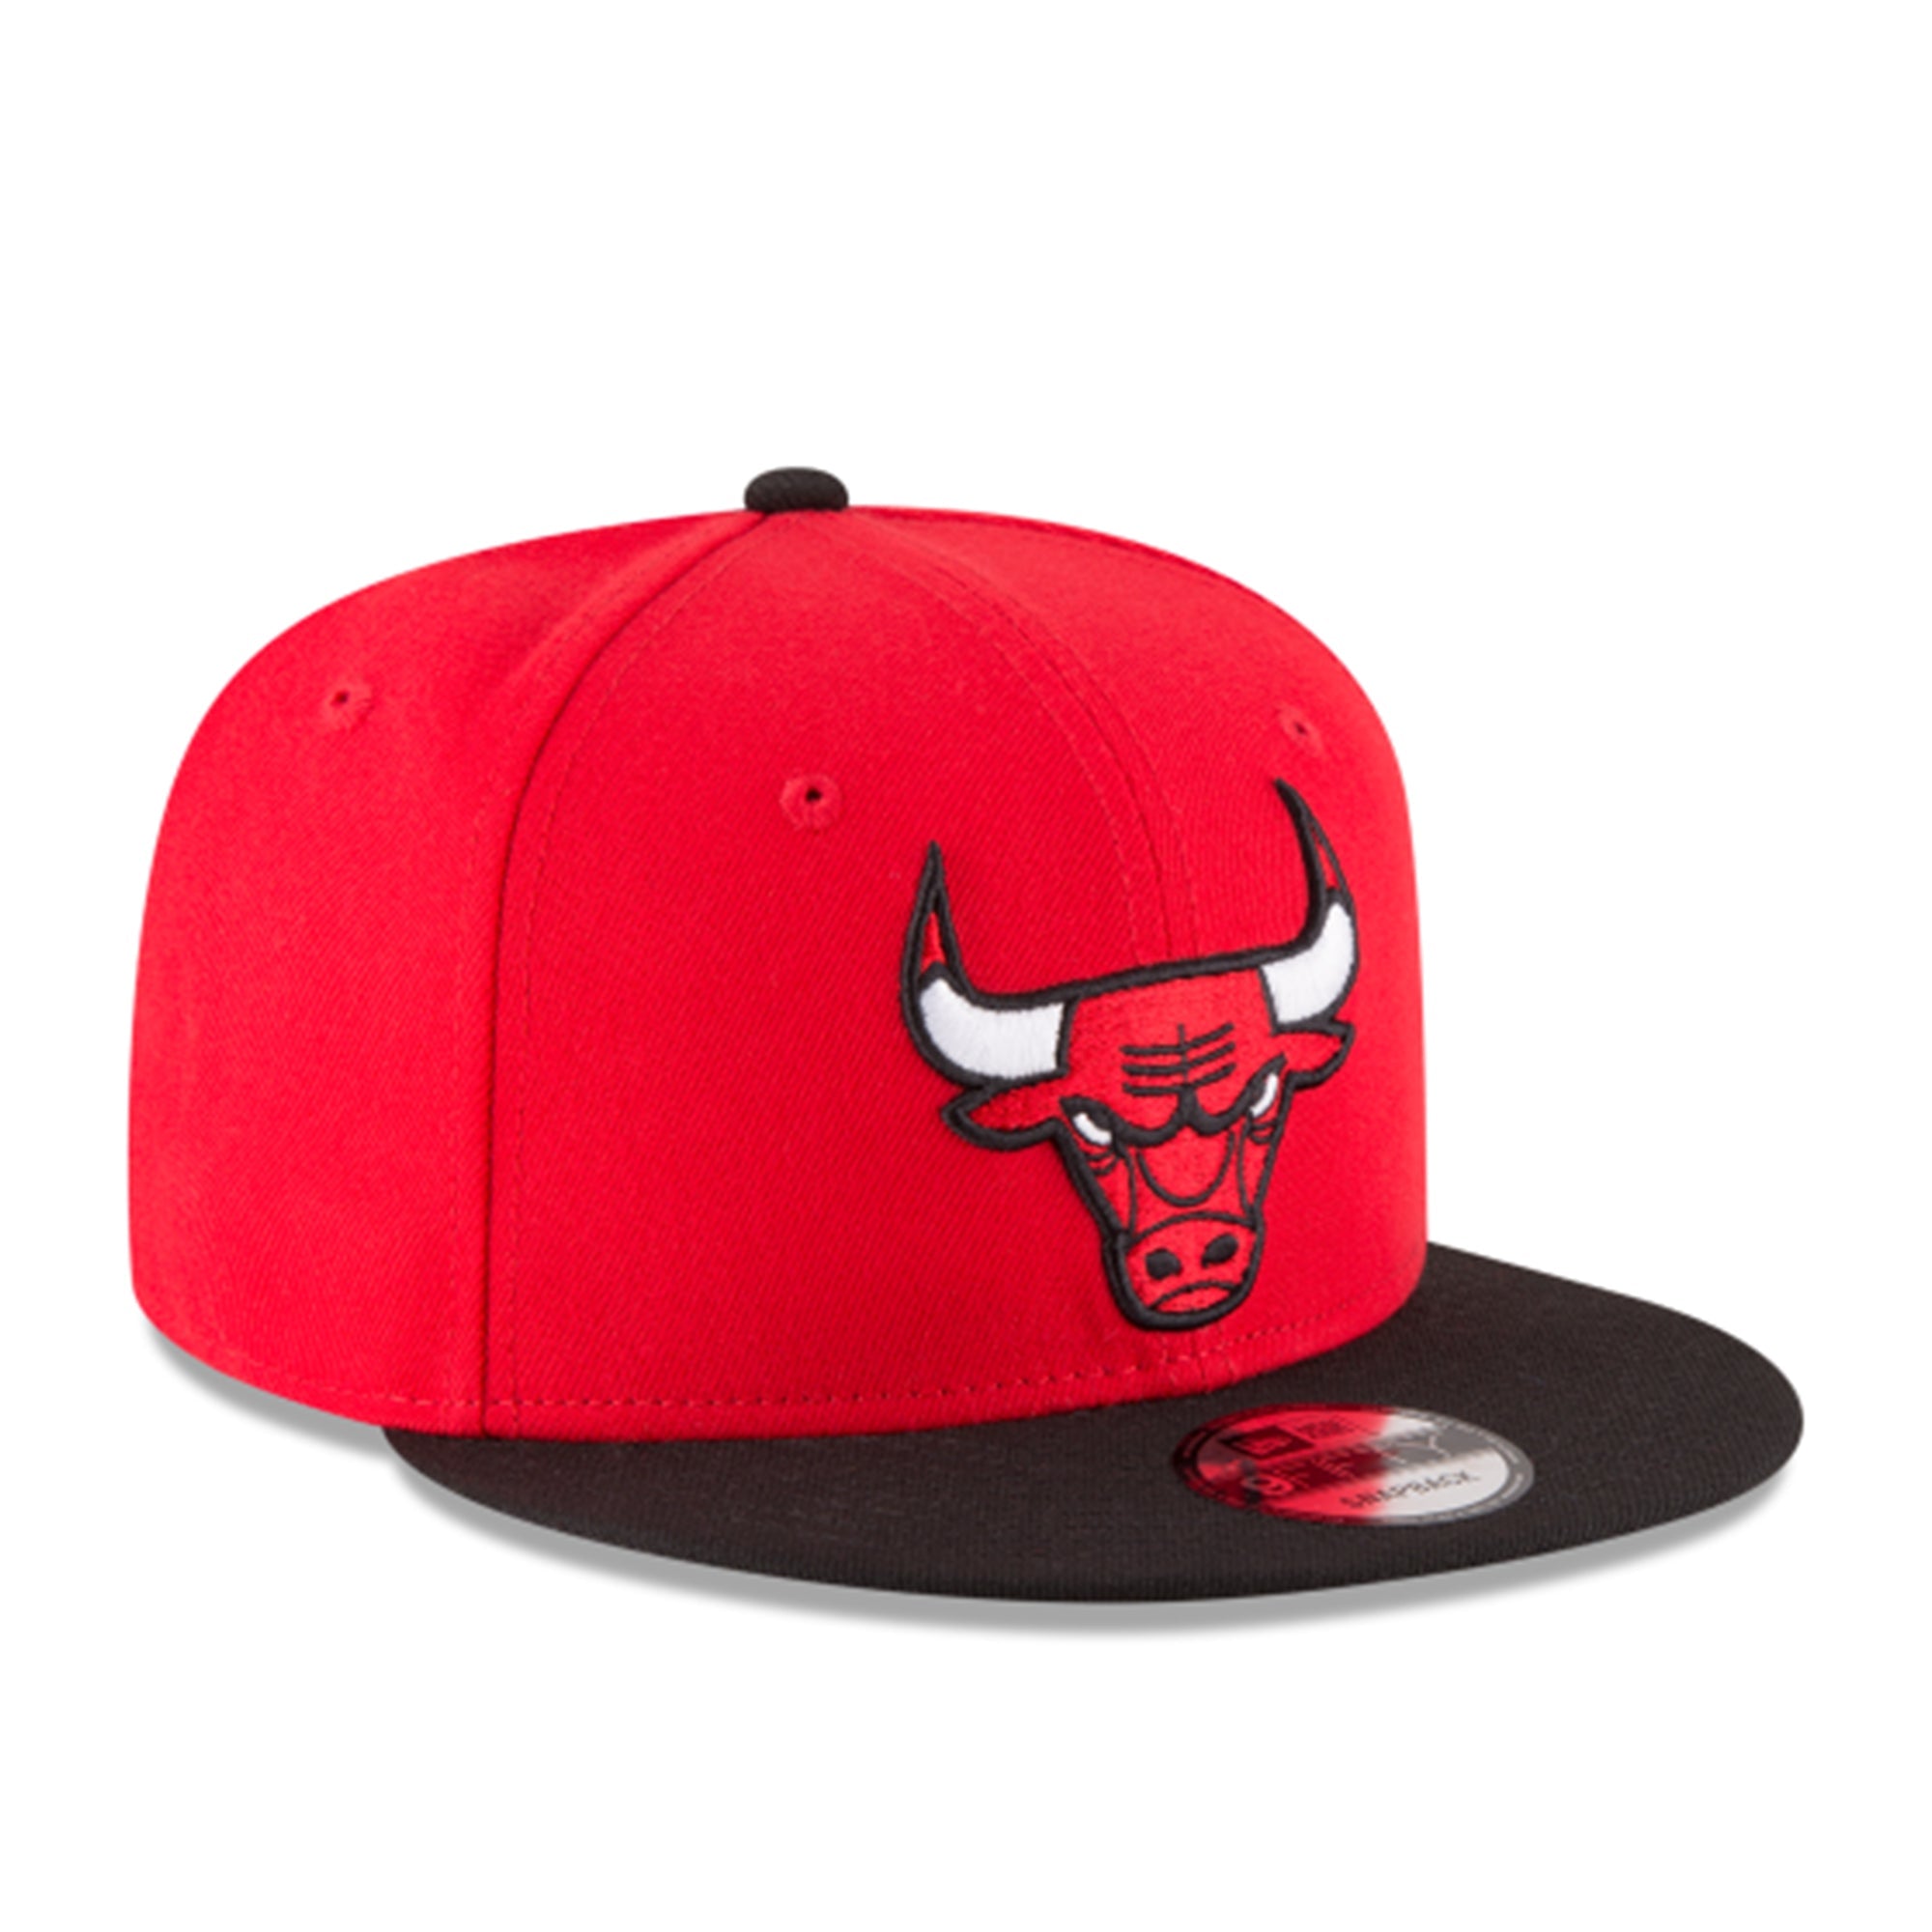 New Era Chicago Bulls Snapback Hat (Red Black)3